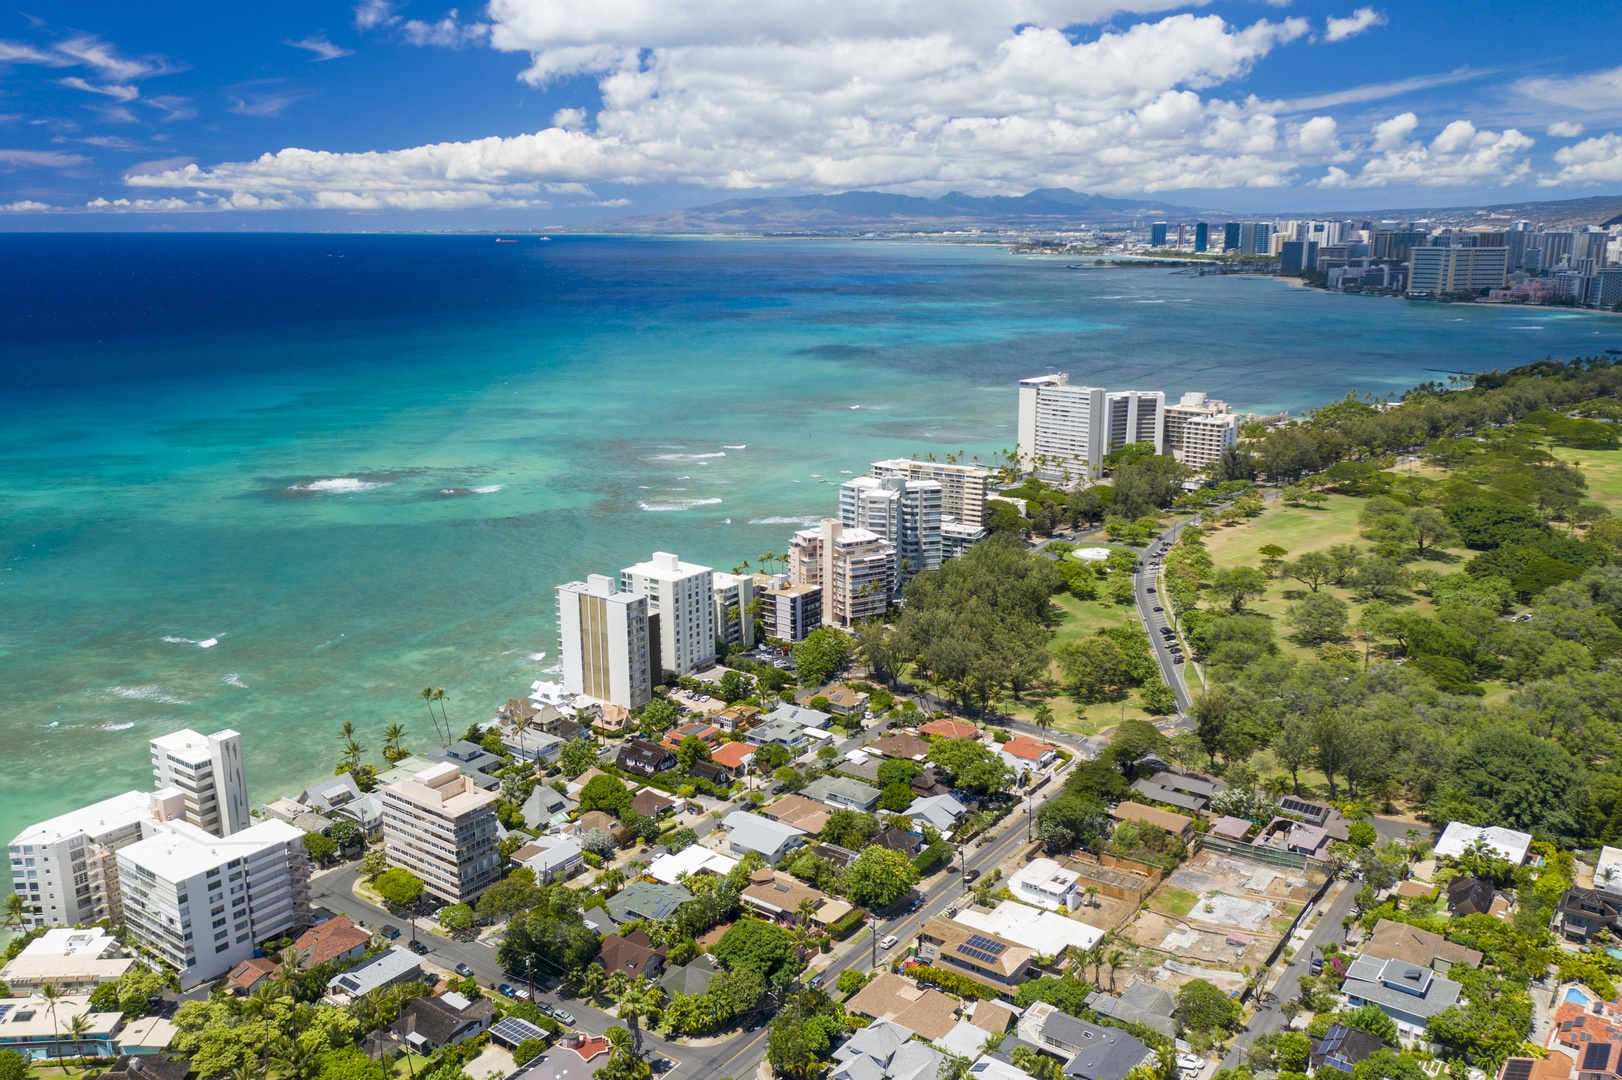 Honolulu Vacation Rentals, Diamond Head Surf House - Aerial view of Diamond Head neighborhood looking West.